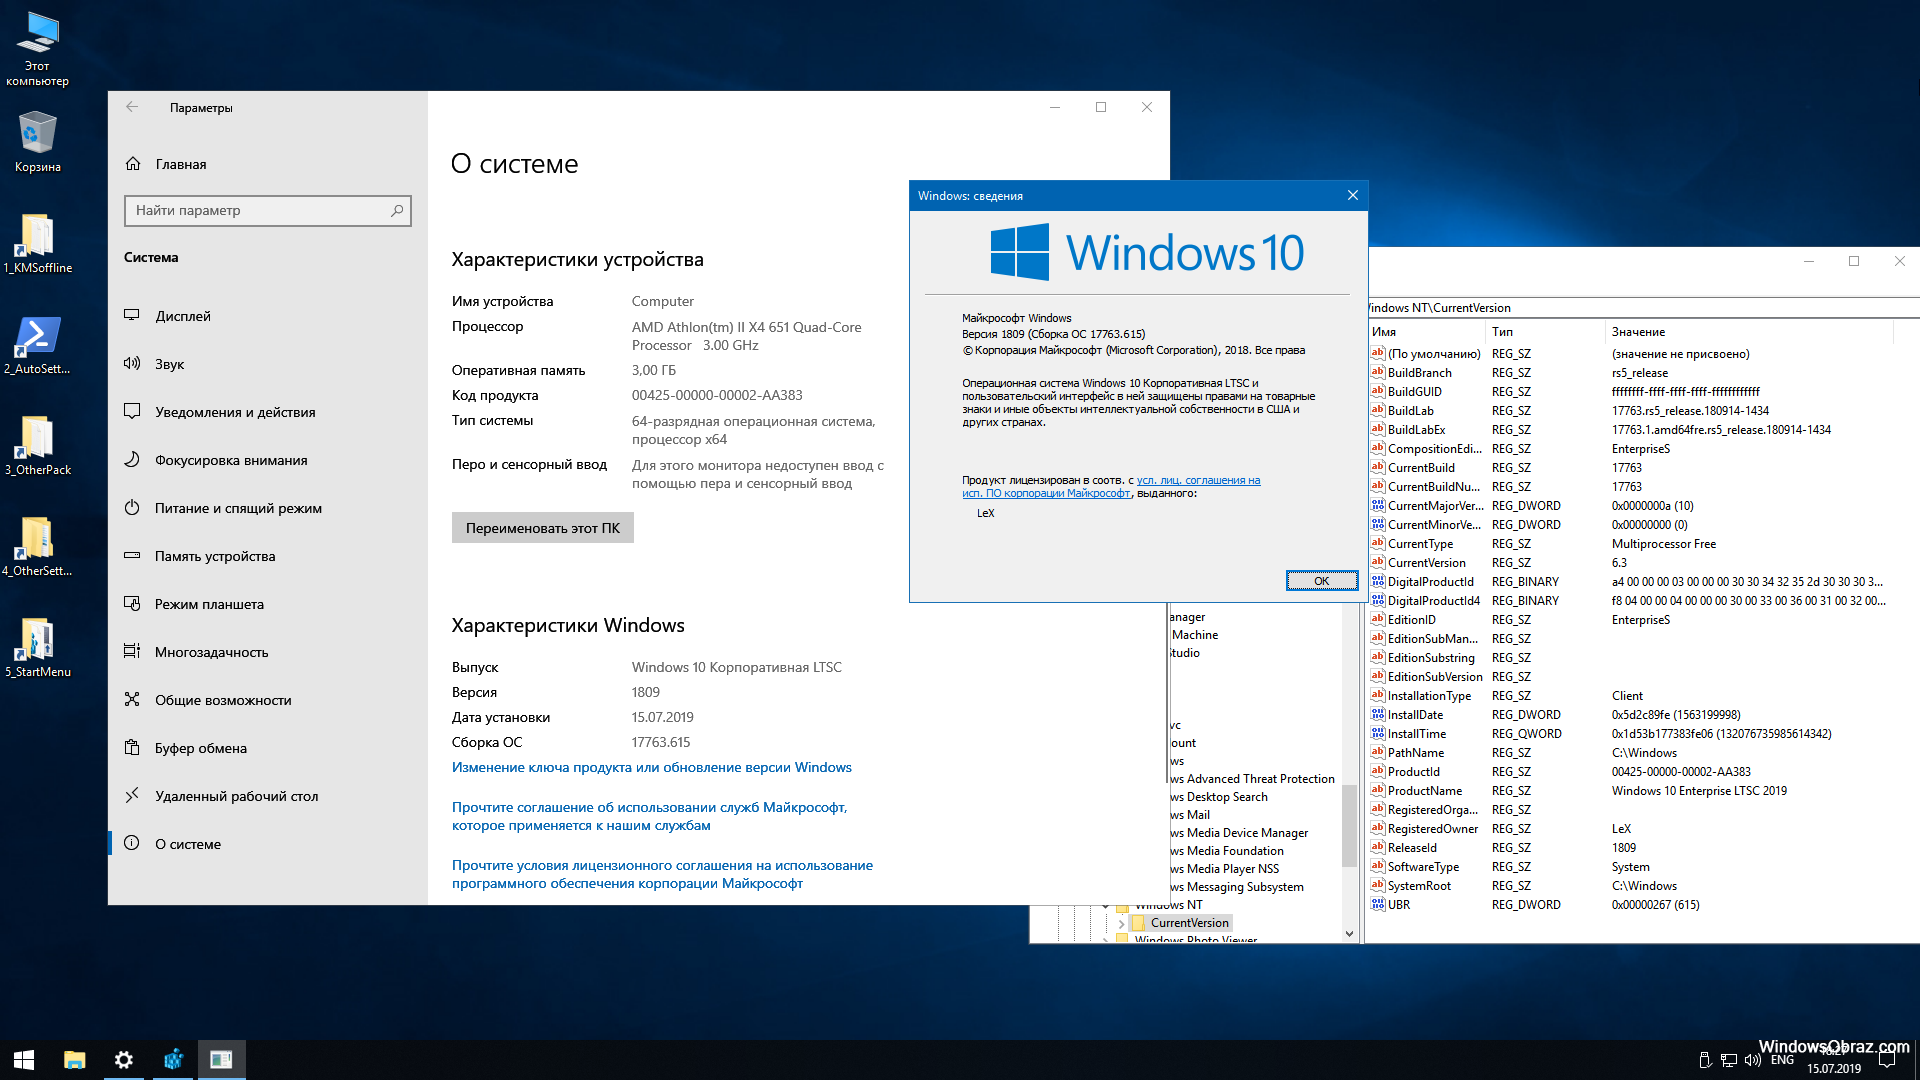 Вин 10 64 бит. Windows 10 Enterprise корпоративная) 64 bit. Windows 10 корпоративная DVD. Оперативная система виндовс 10. Windows 10 Enterprise 1809 LTSC 2019 MSDN.